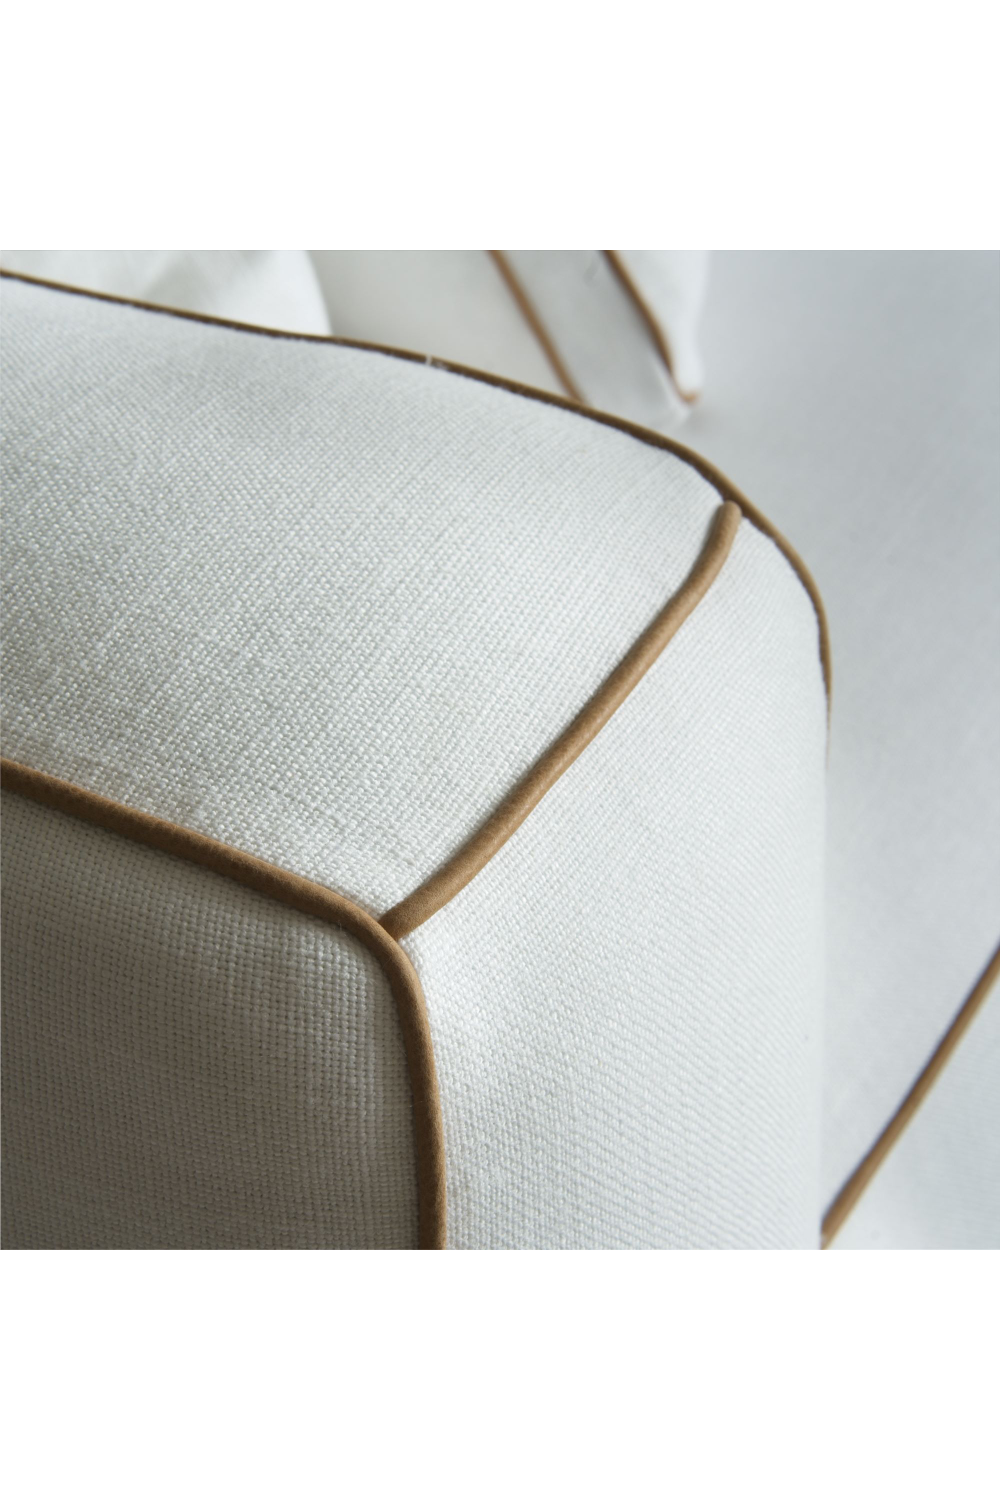 White Linen Sofa With Piping | Andrew Martin Hogarth | Oroa.com